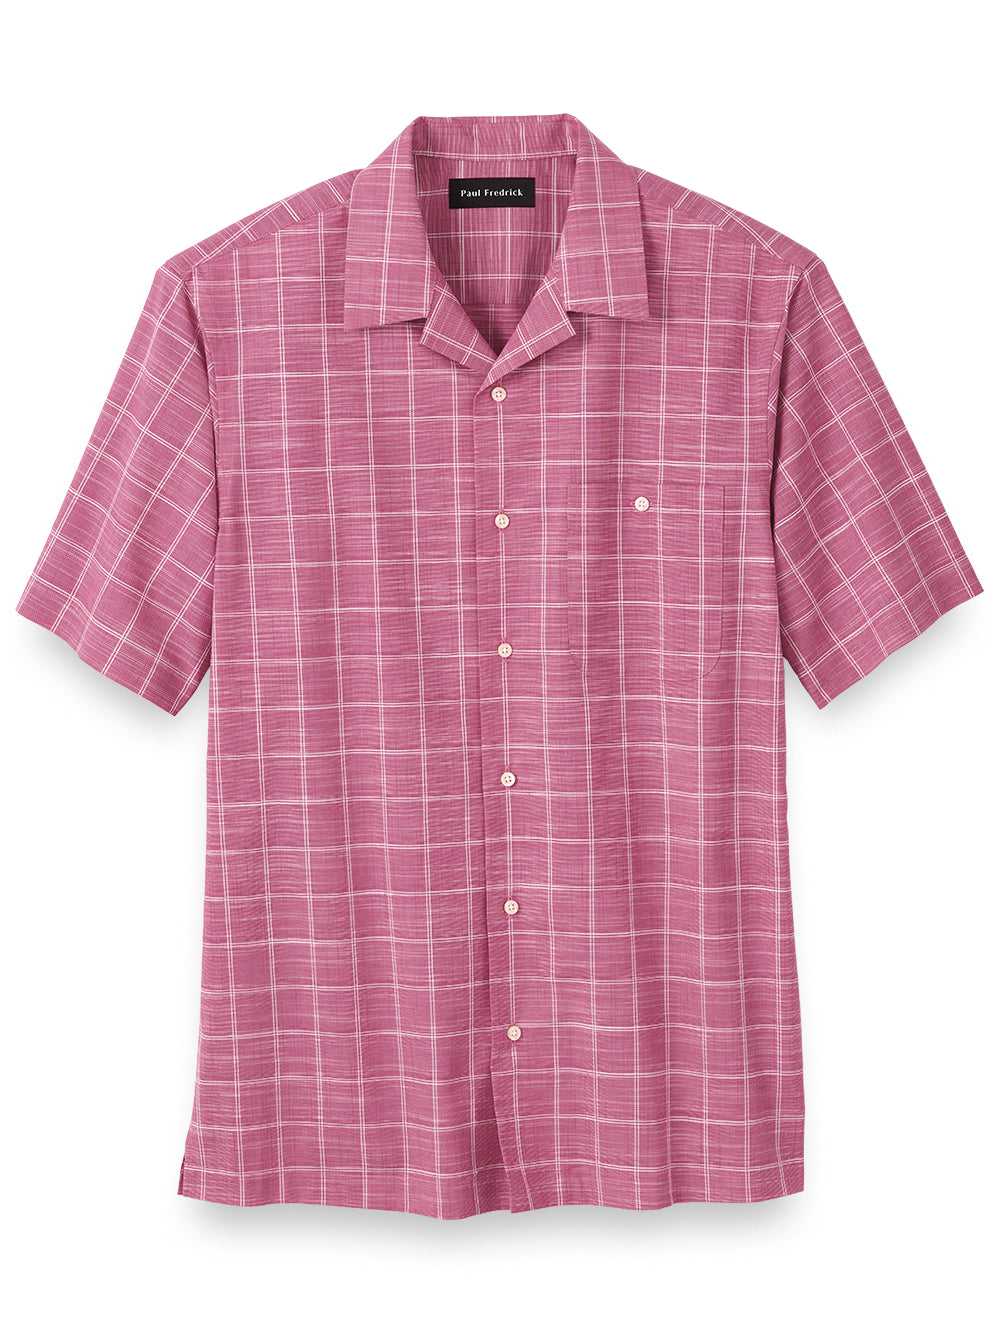 Paul Fredrick, Slim Fit Cotton Windowpane Casual Shirt